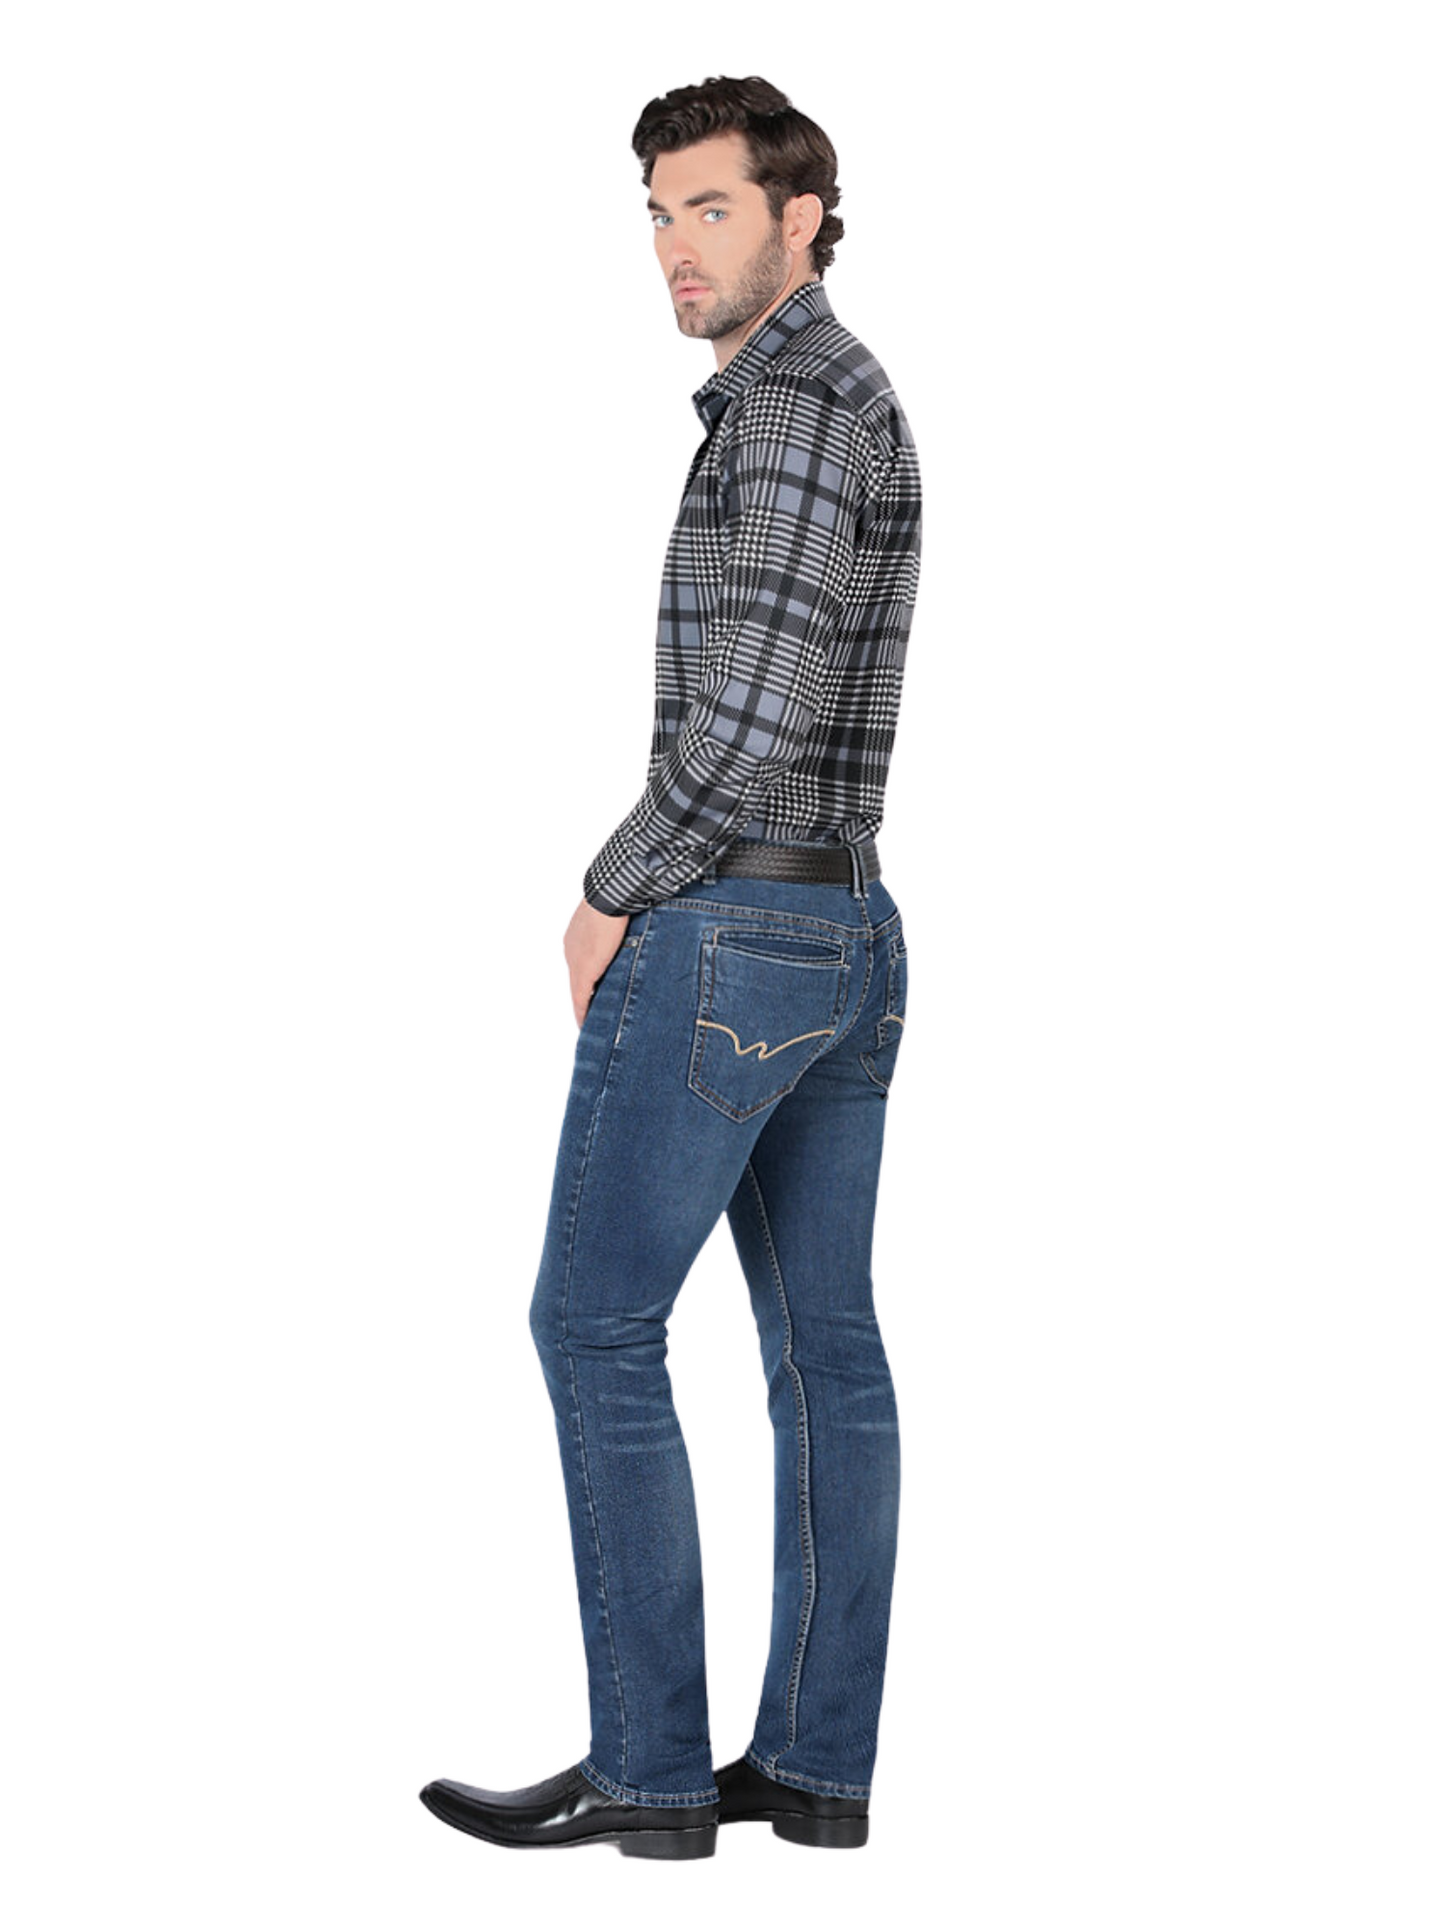 Stretch Denim Jeans for Men 'Montero' - ID: 5311 Denim Jeans Montero